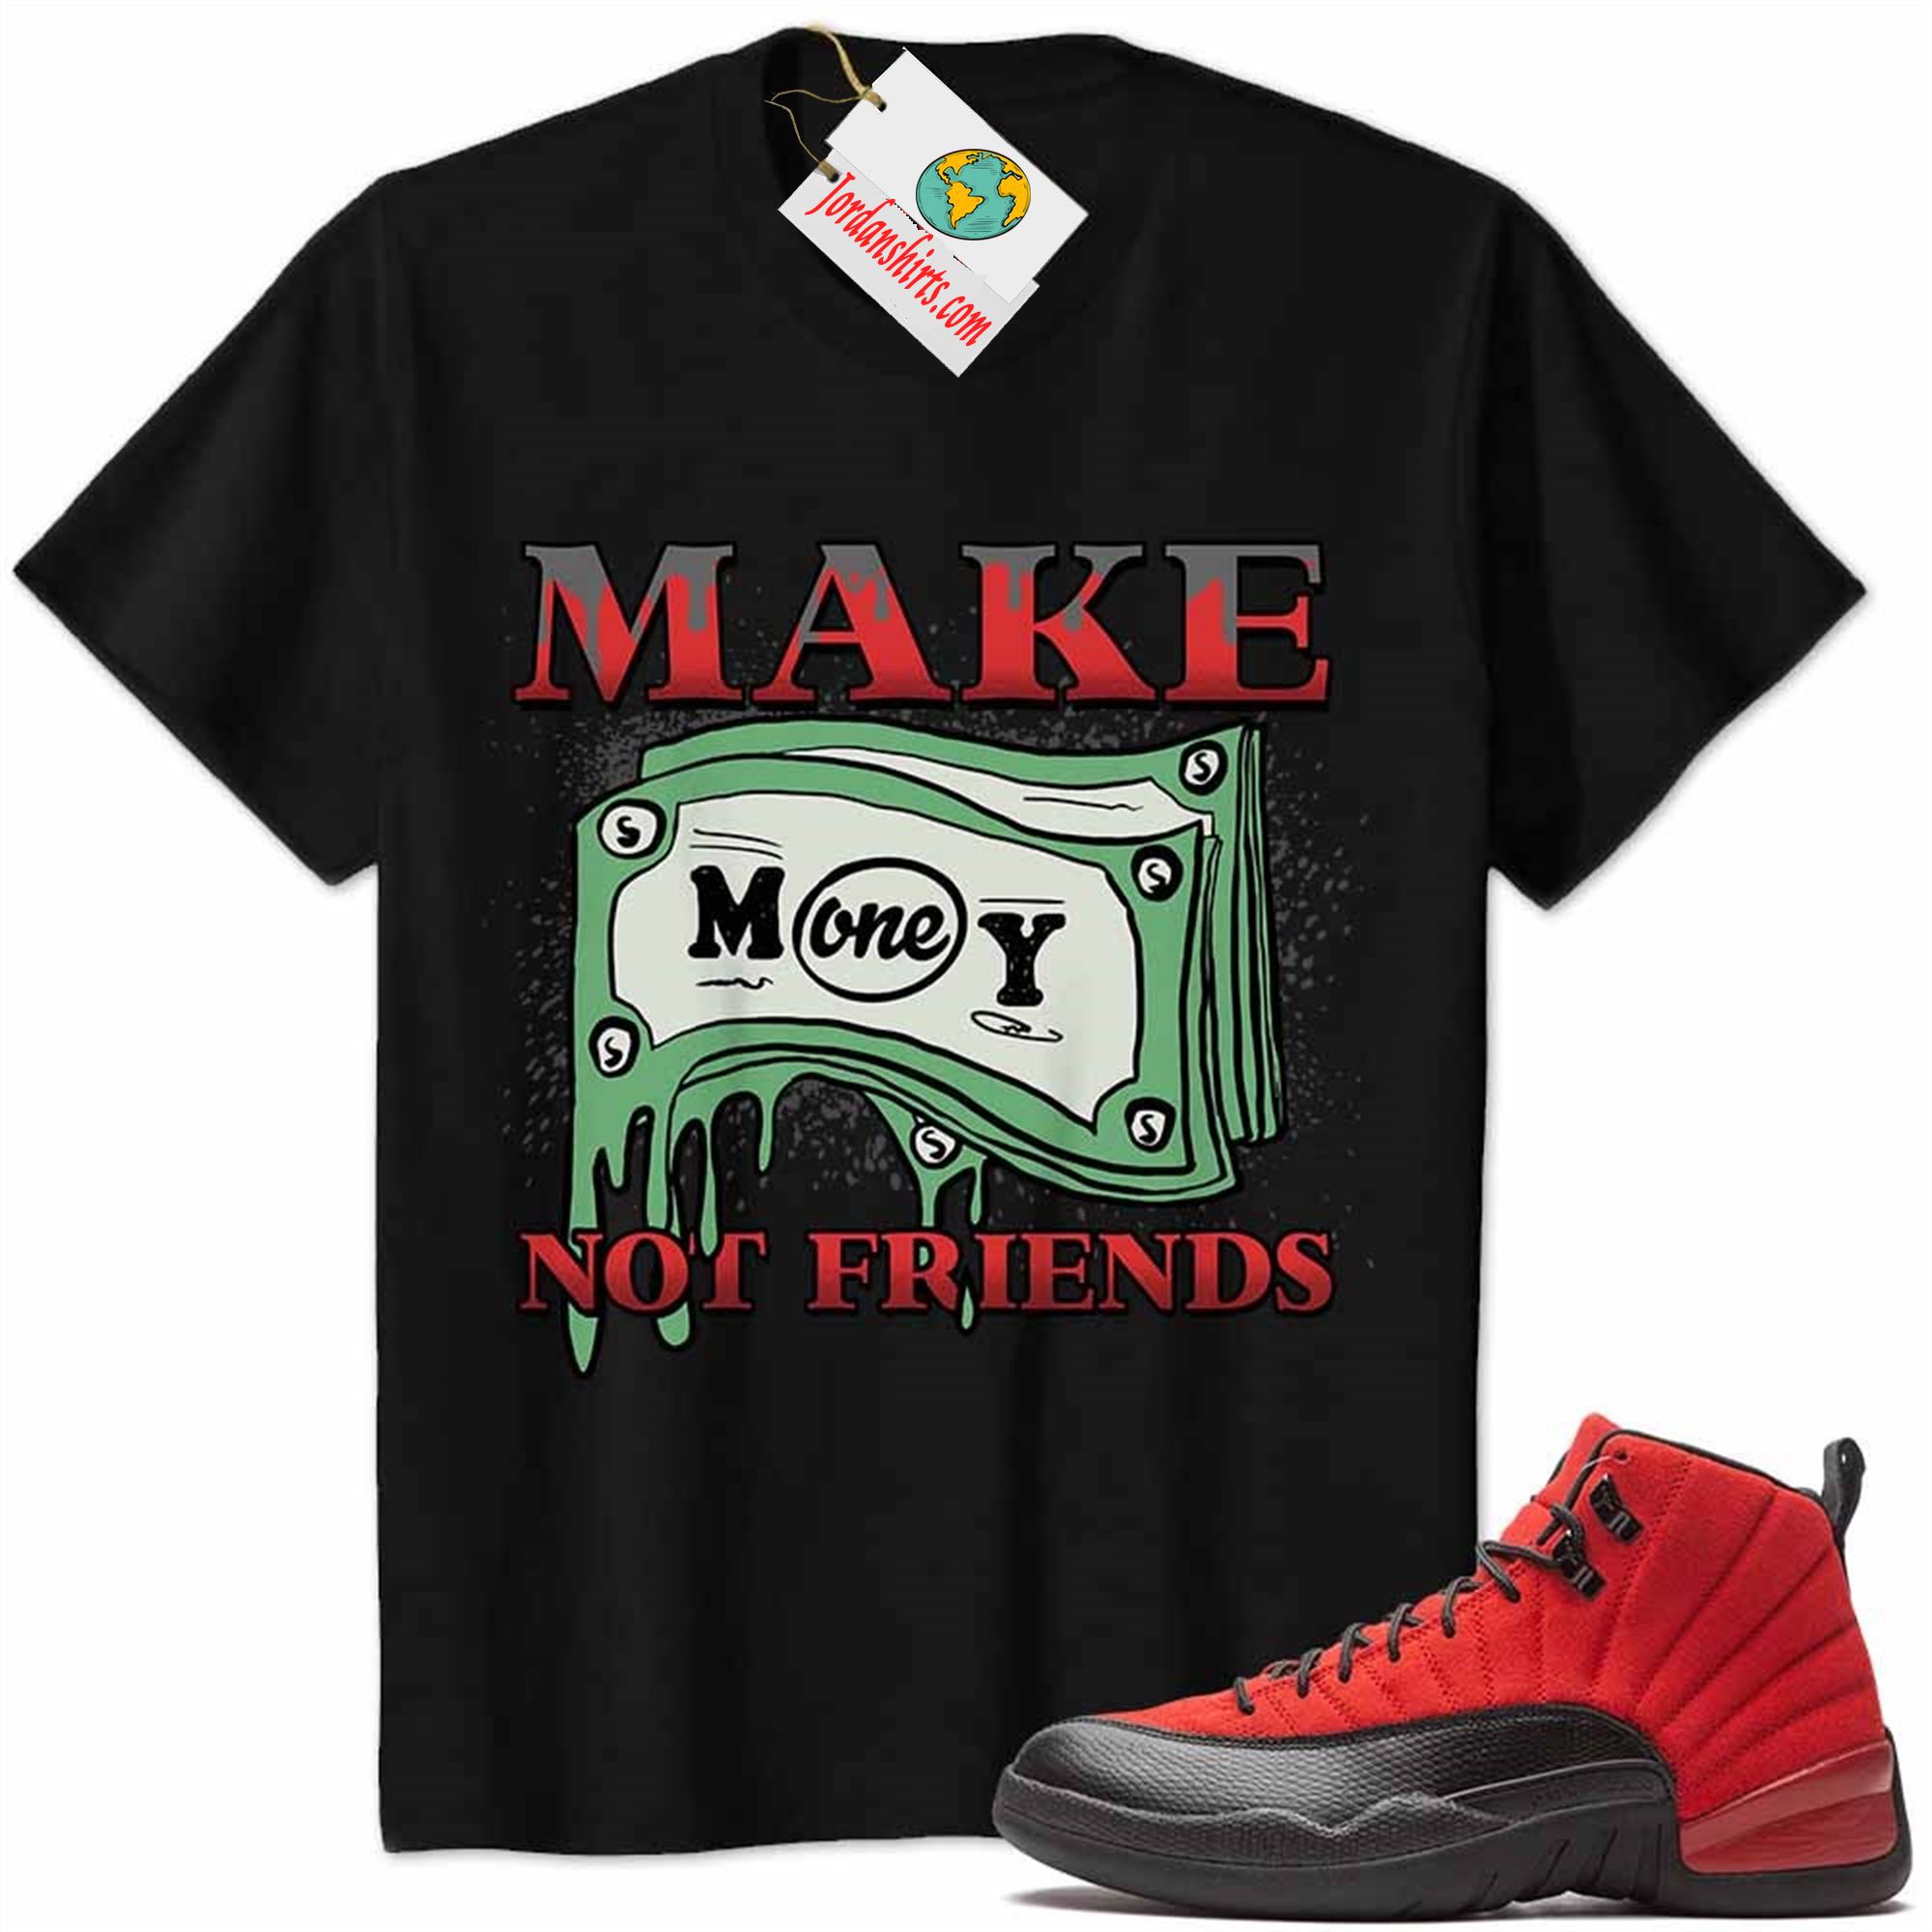 Jordan 12 Shirt, Jordan 12 Reverse Flu Game Shirt Make Money Graffiti Black Size Up To 5xl